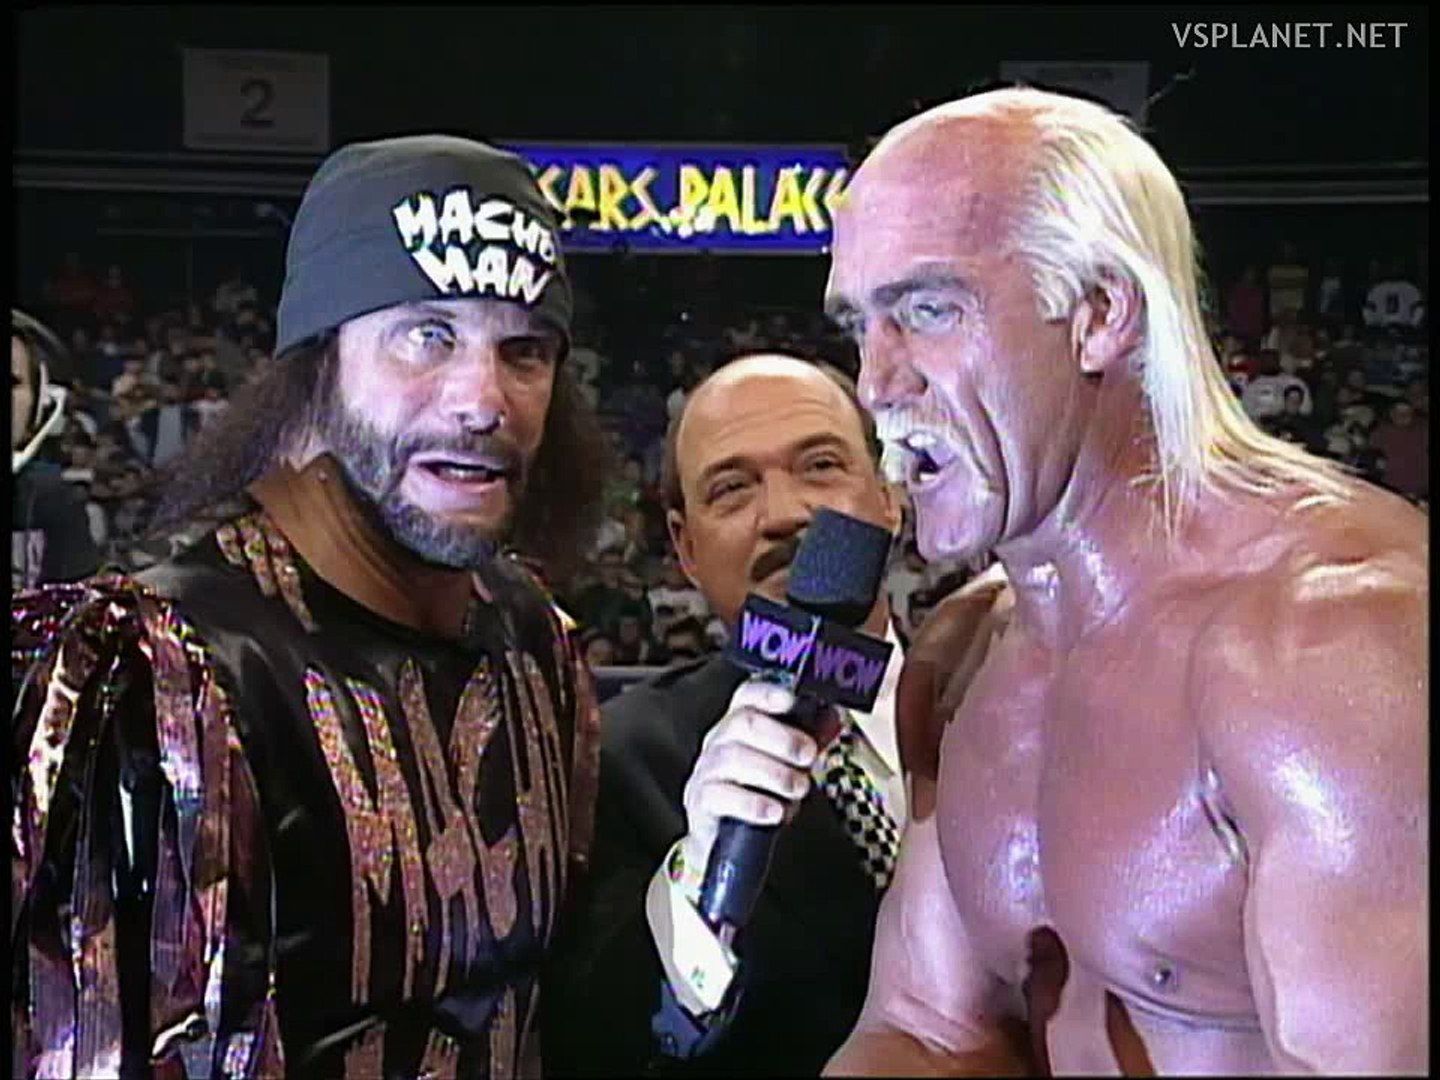 Hollywood Hogan cuts promo next to Randy Savage